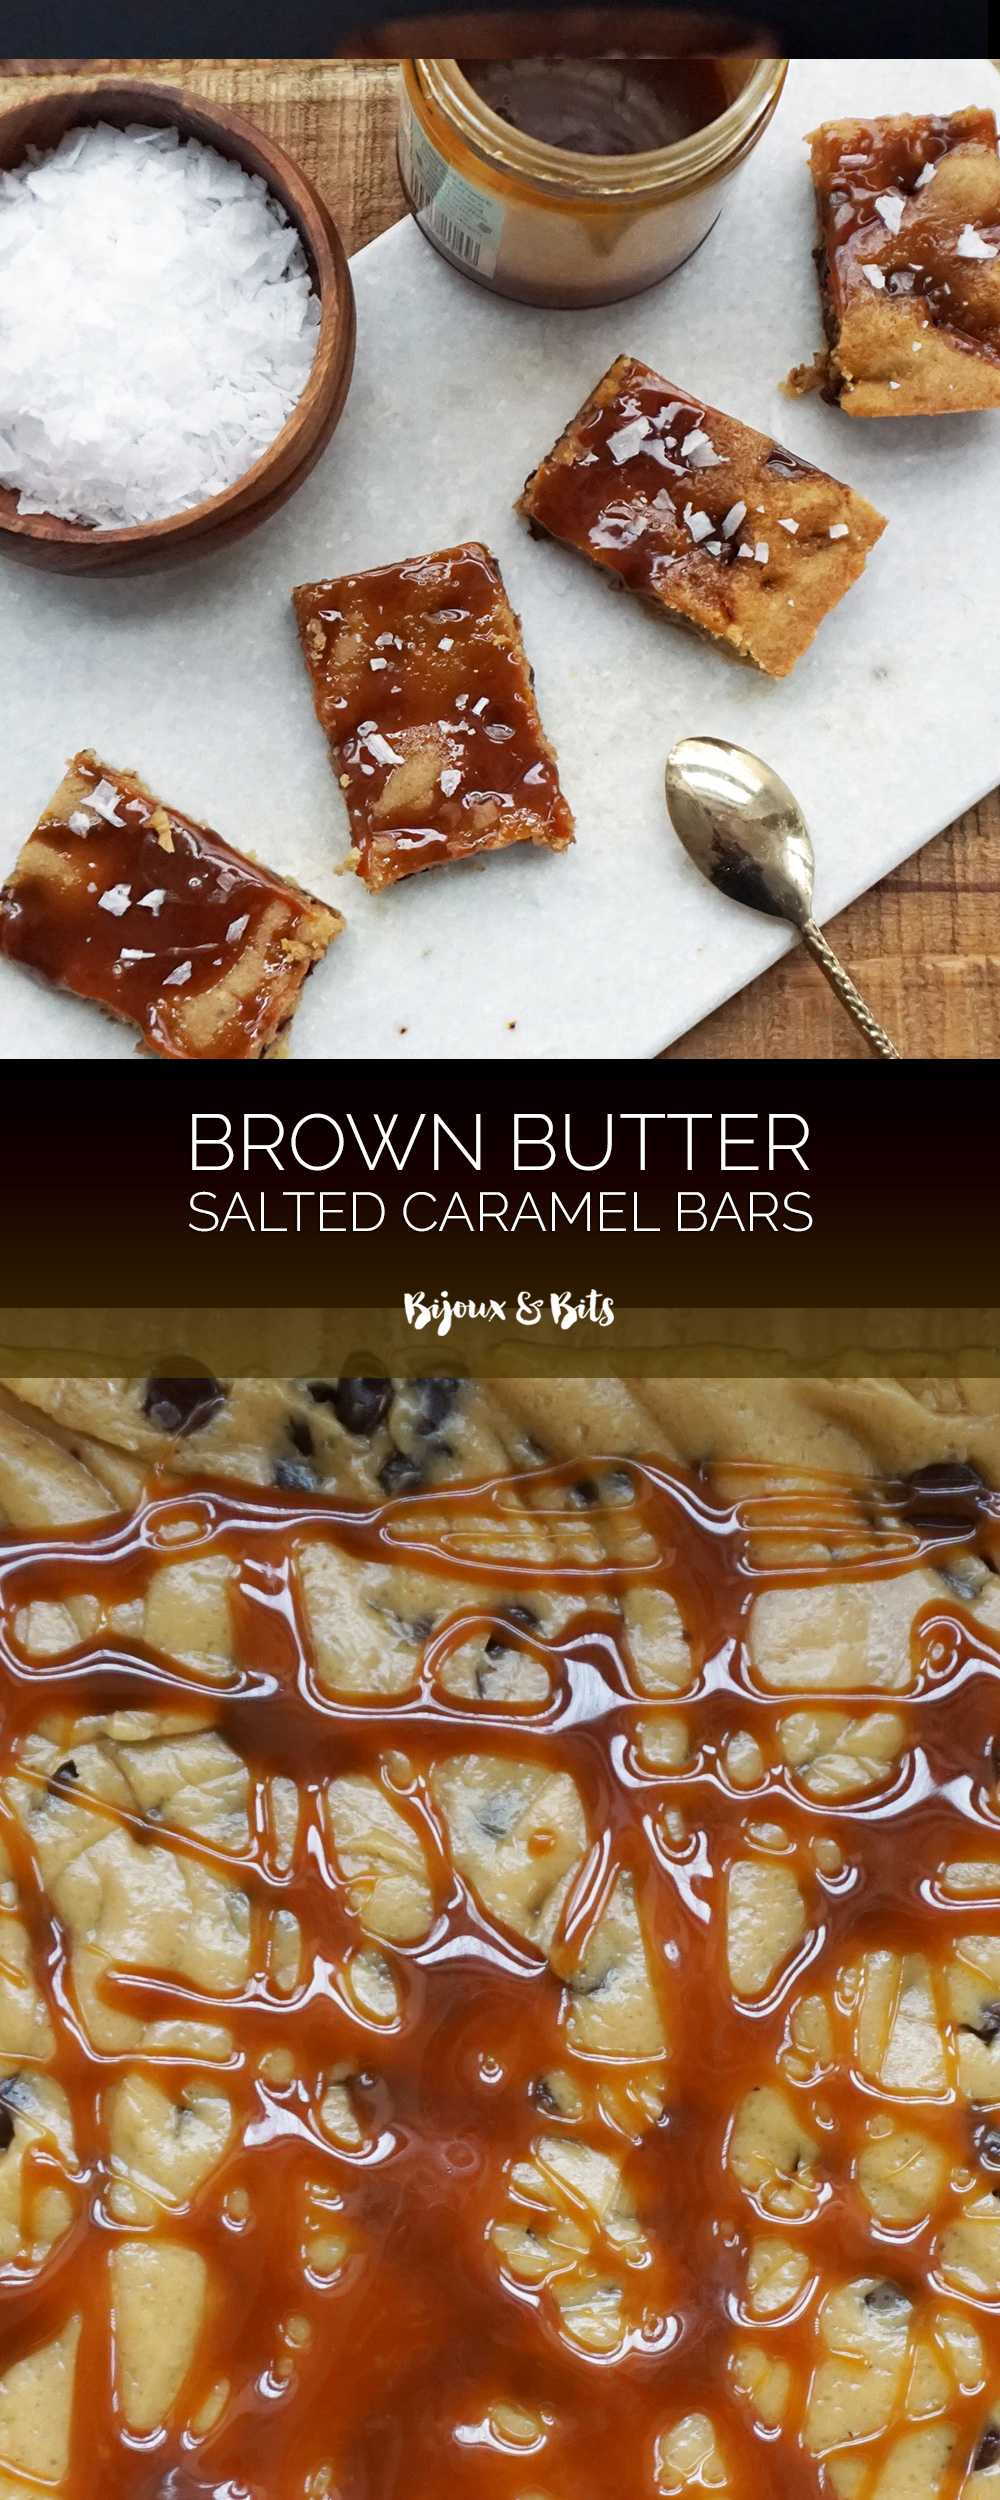 Brown butter salted caramel bars from @bijouxandbits